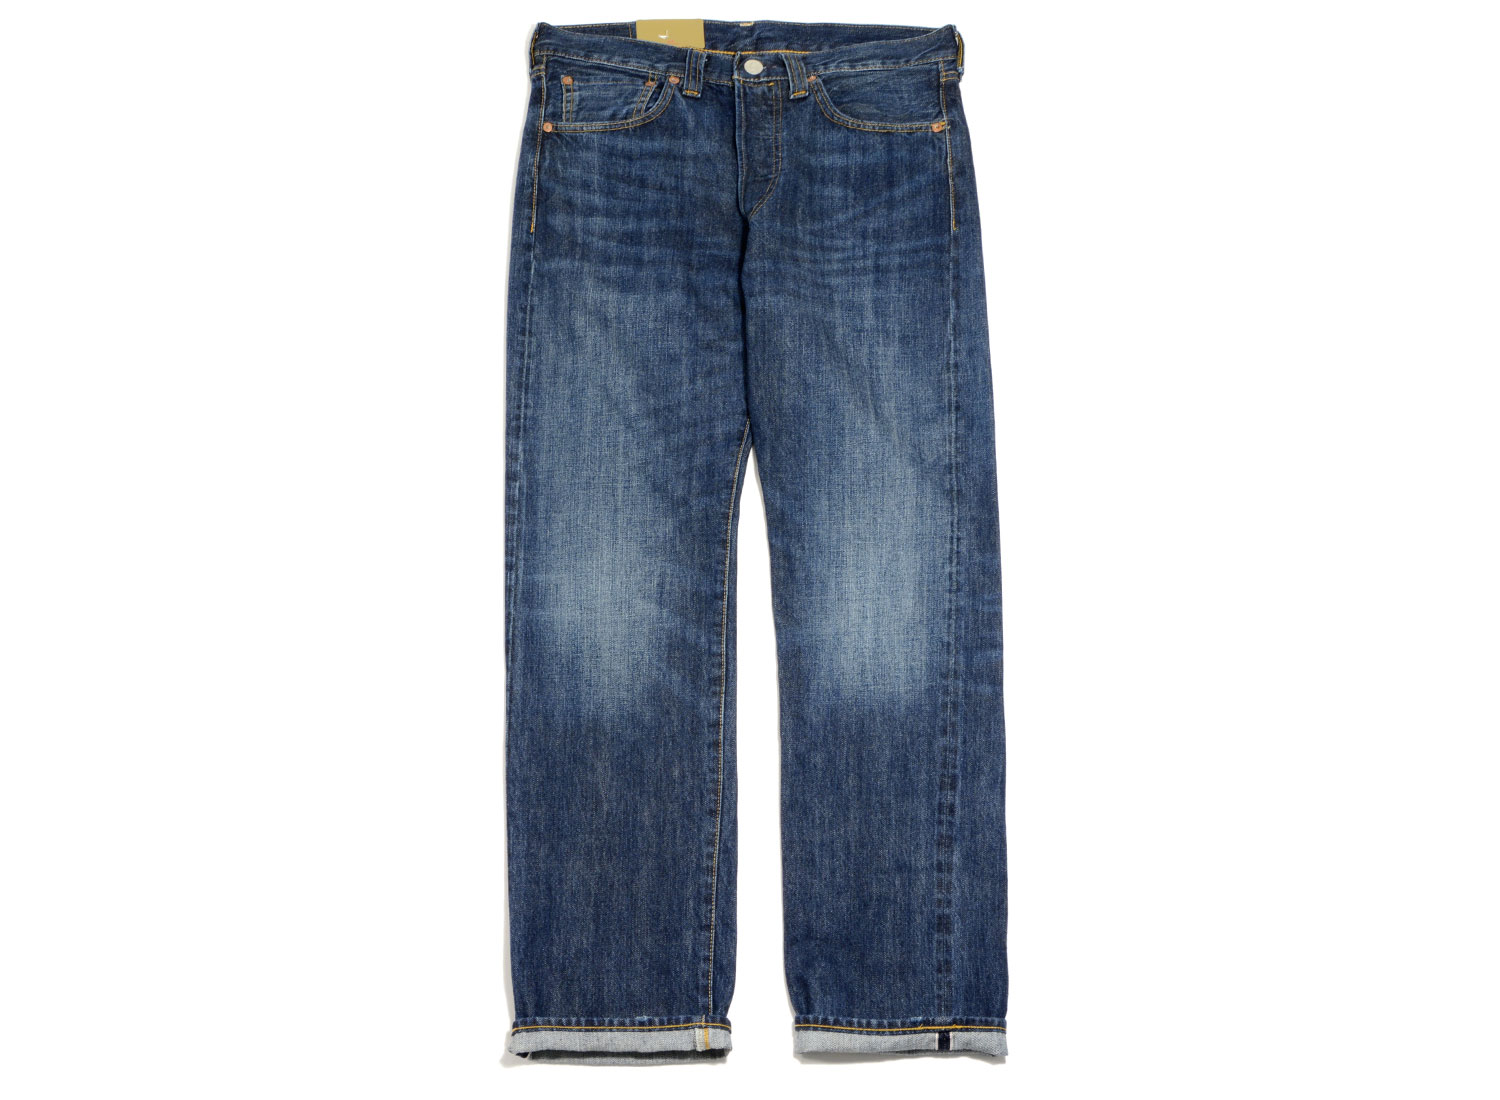 Friday's Child - LEVIS LVC 1947 501 selvedge cone denim jeans. Tagged  33x32. NWT. DM If interested. #vintage #vintagelevis #lvc #selvedge